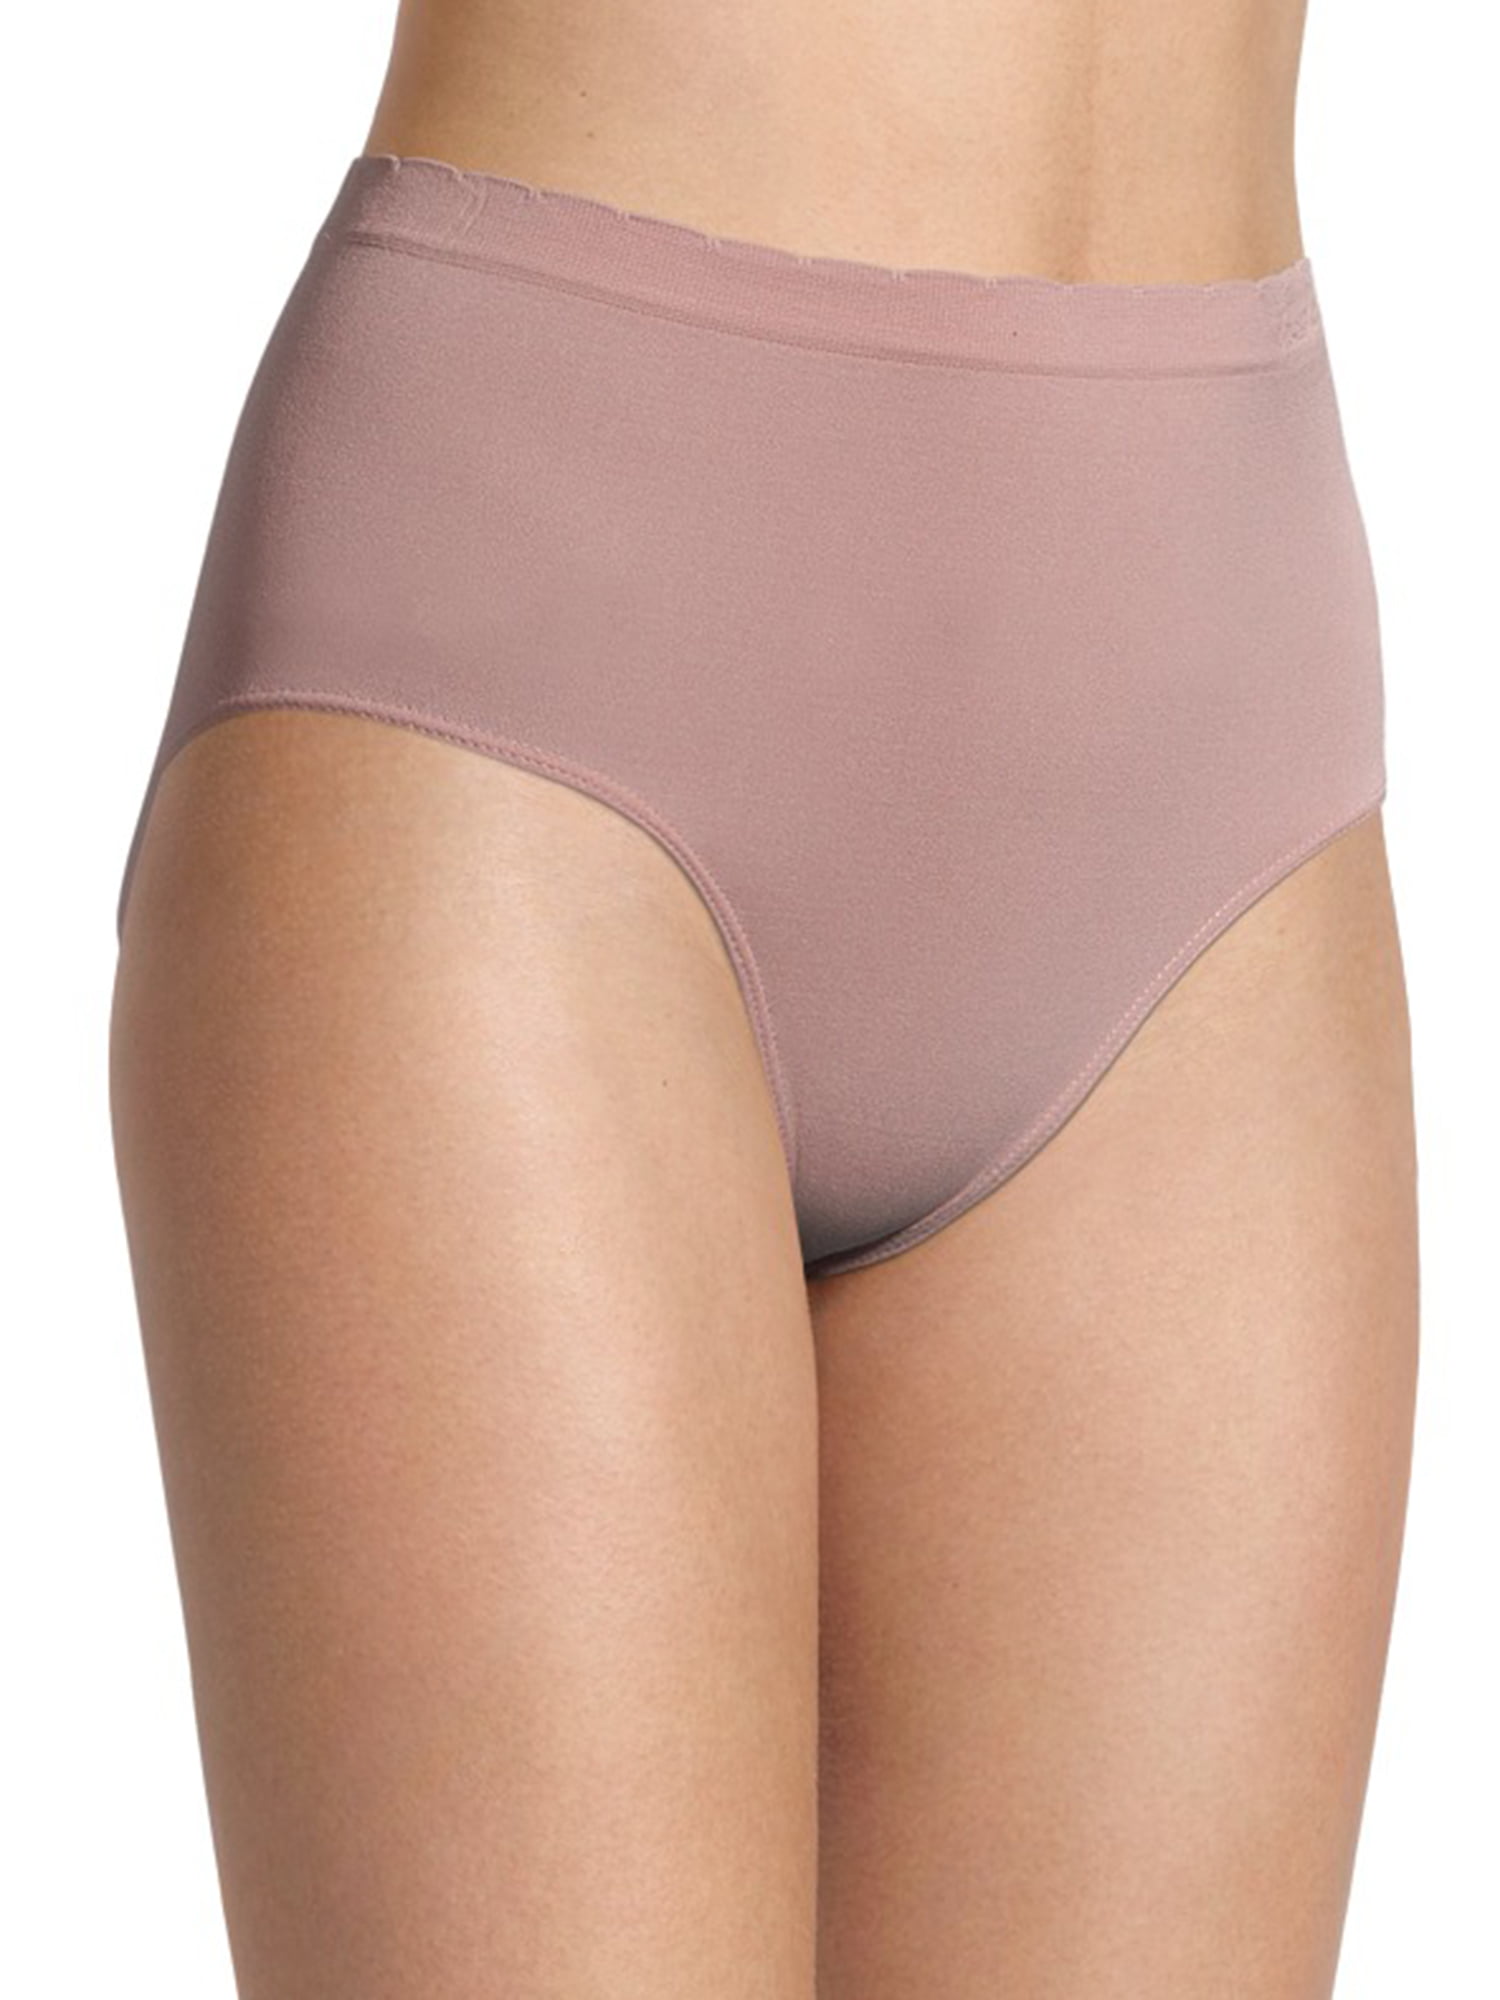 GLORIA VANDERBILT Women's Plus Size 5-Pack Tag Free Micro Brief Underwear  Set 